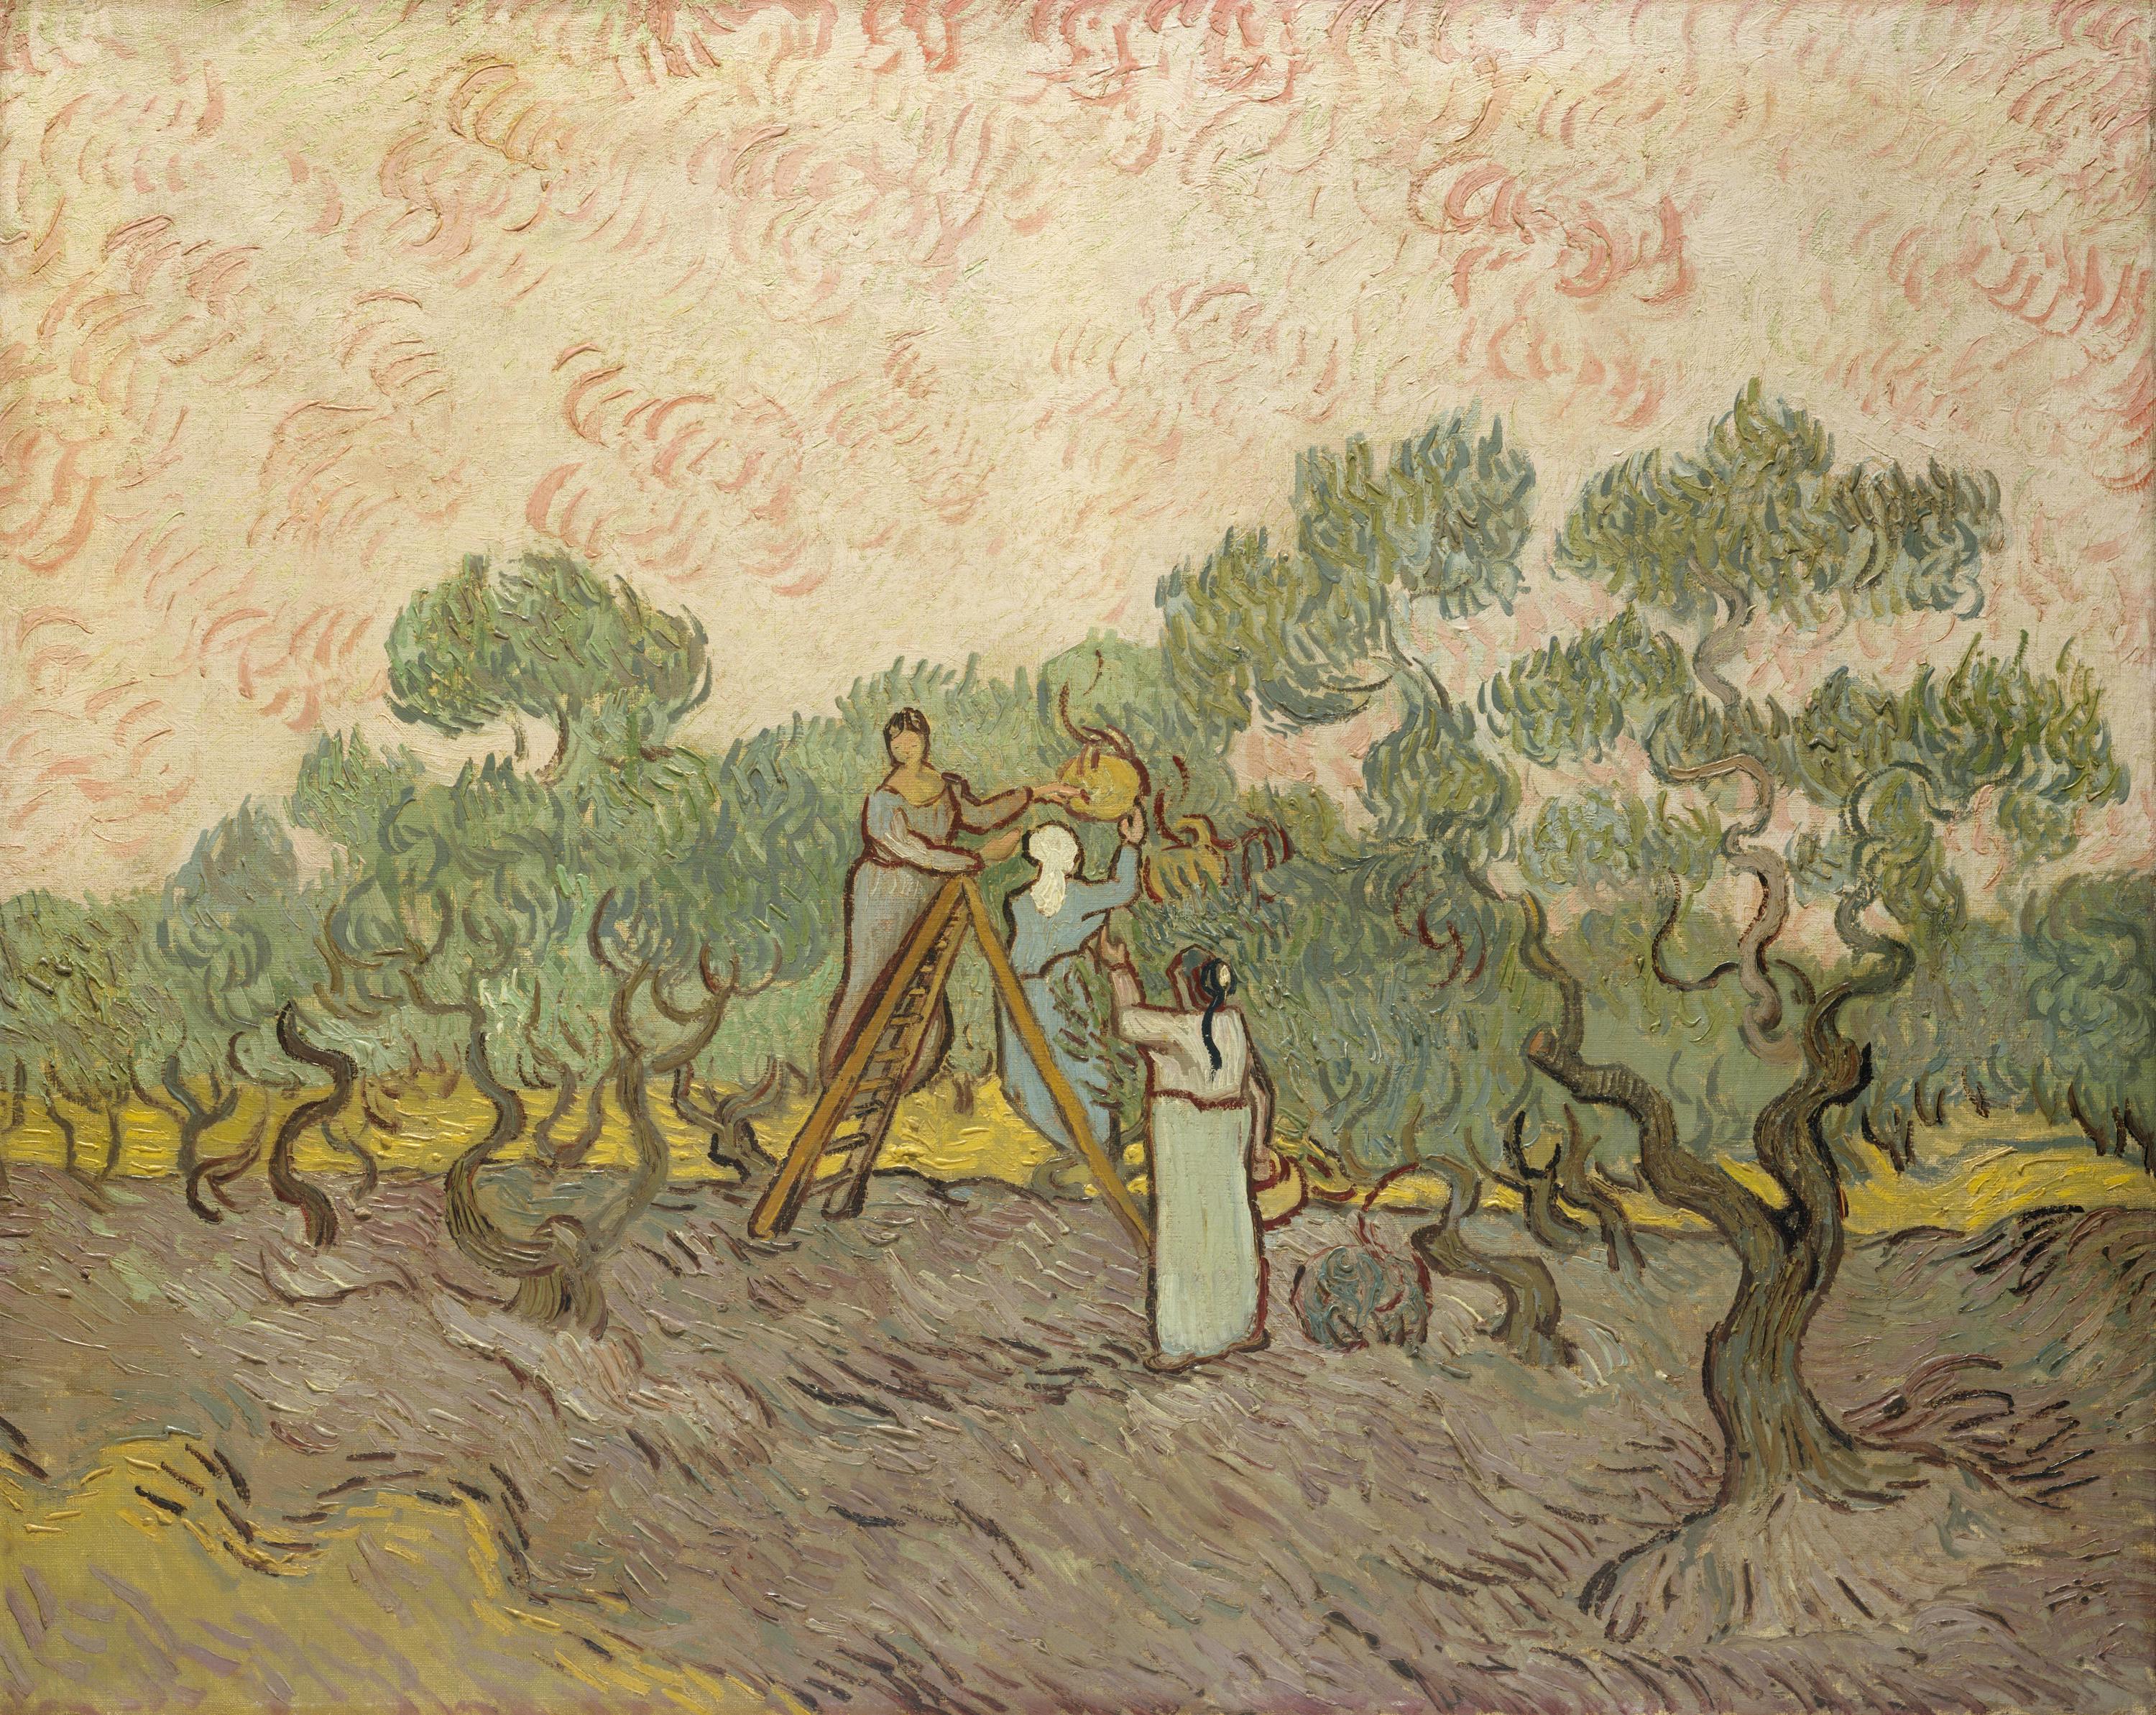 Femei culegând măsline by Vincent van Gogh - 1889 - 72,7 x 91,4 cm 